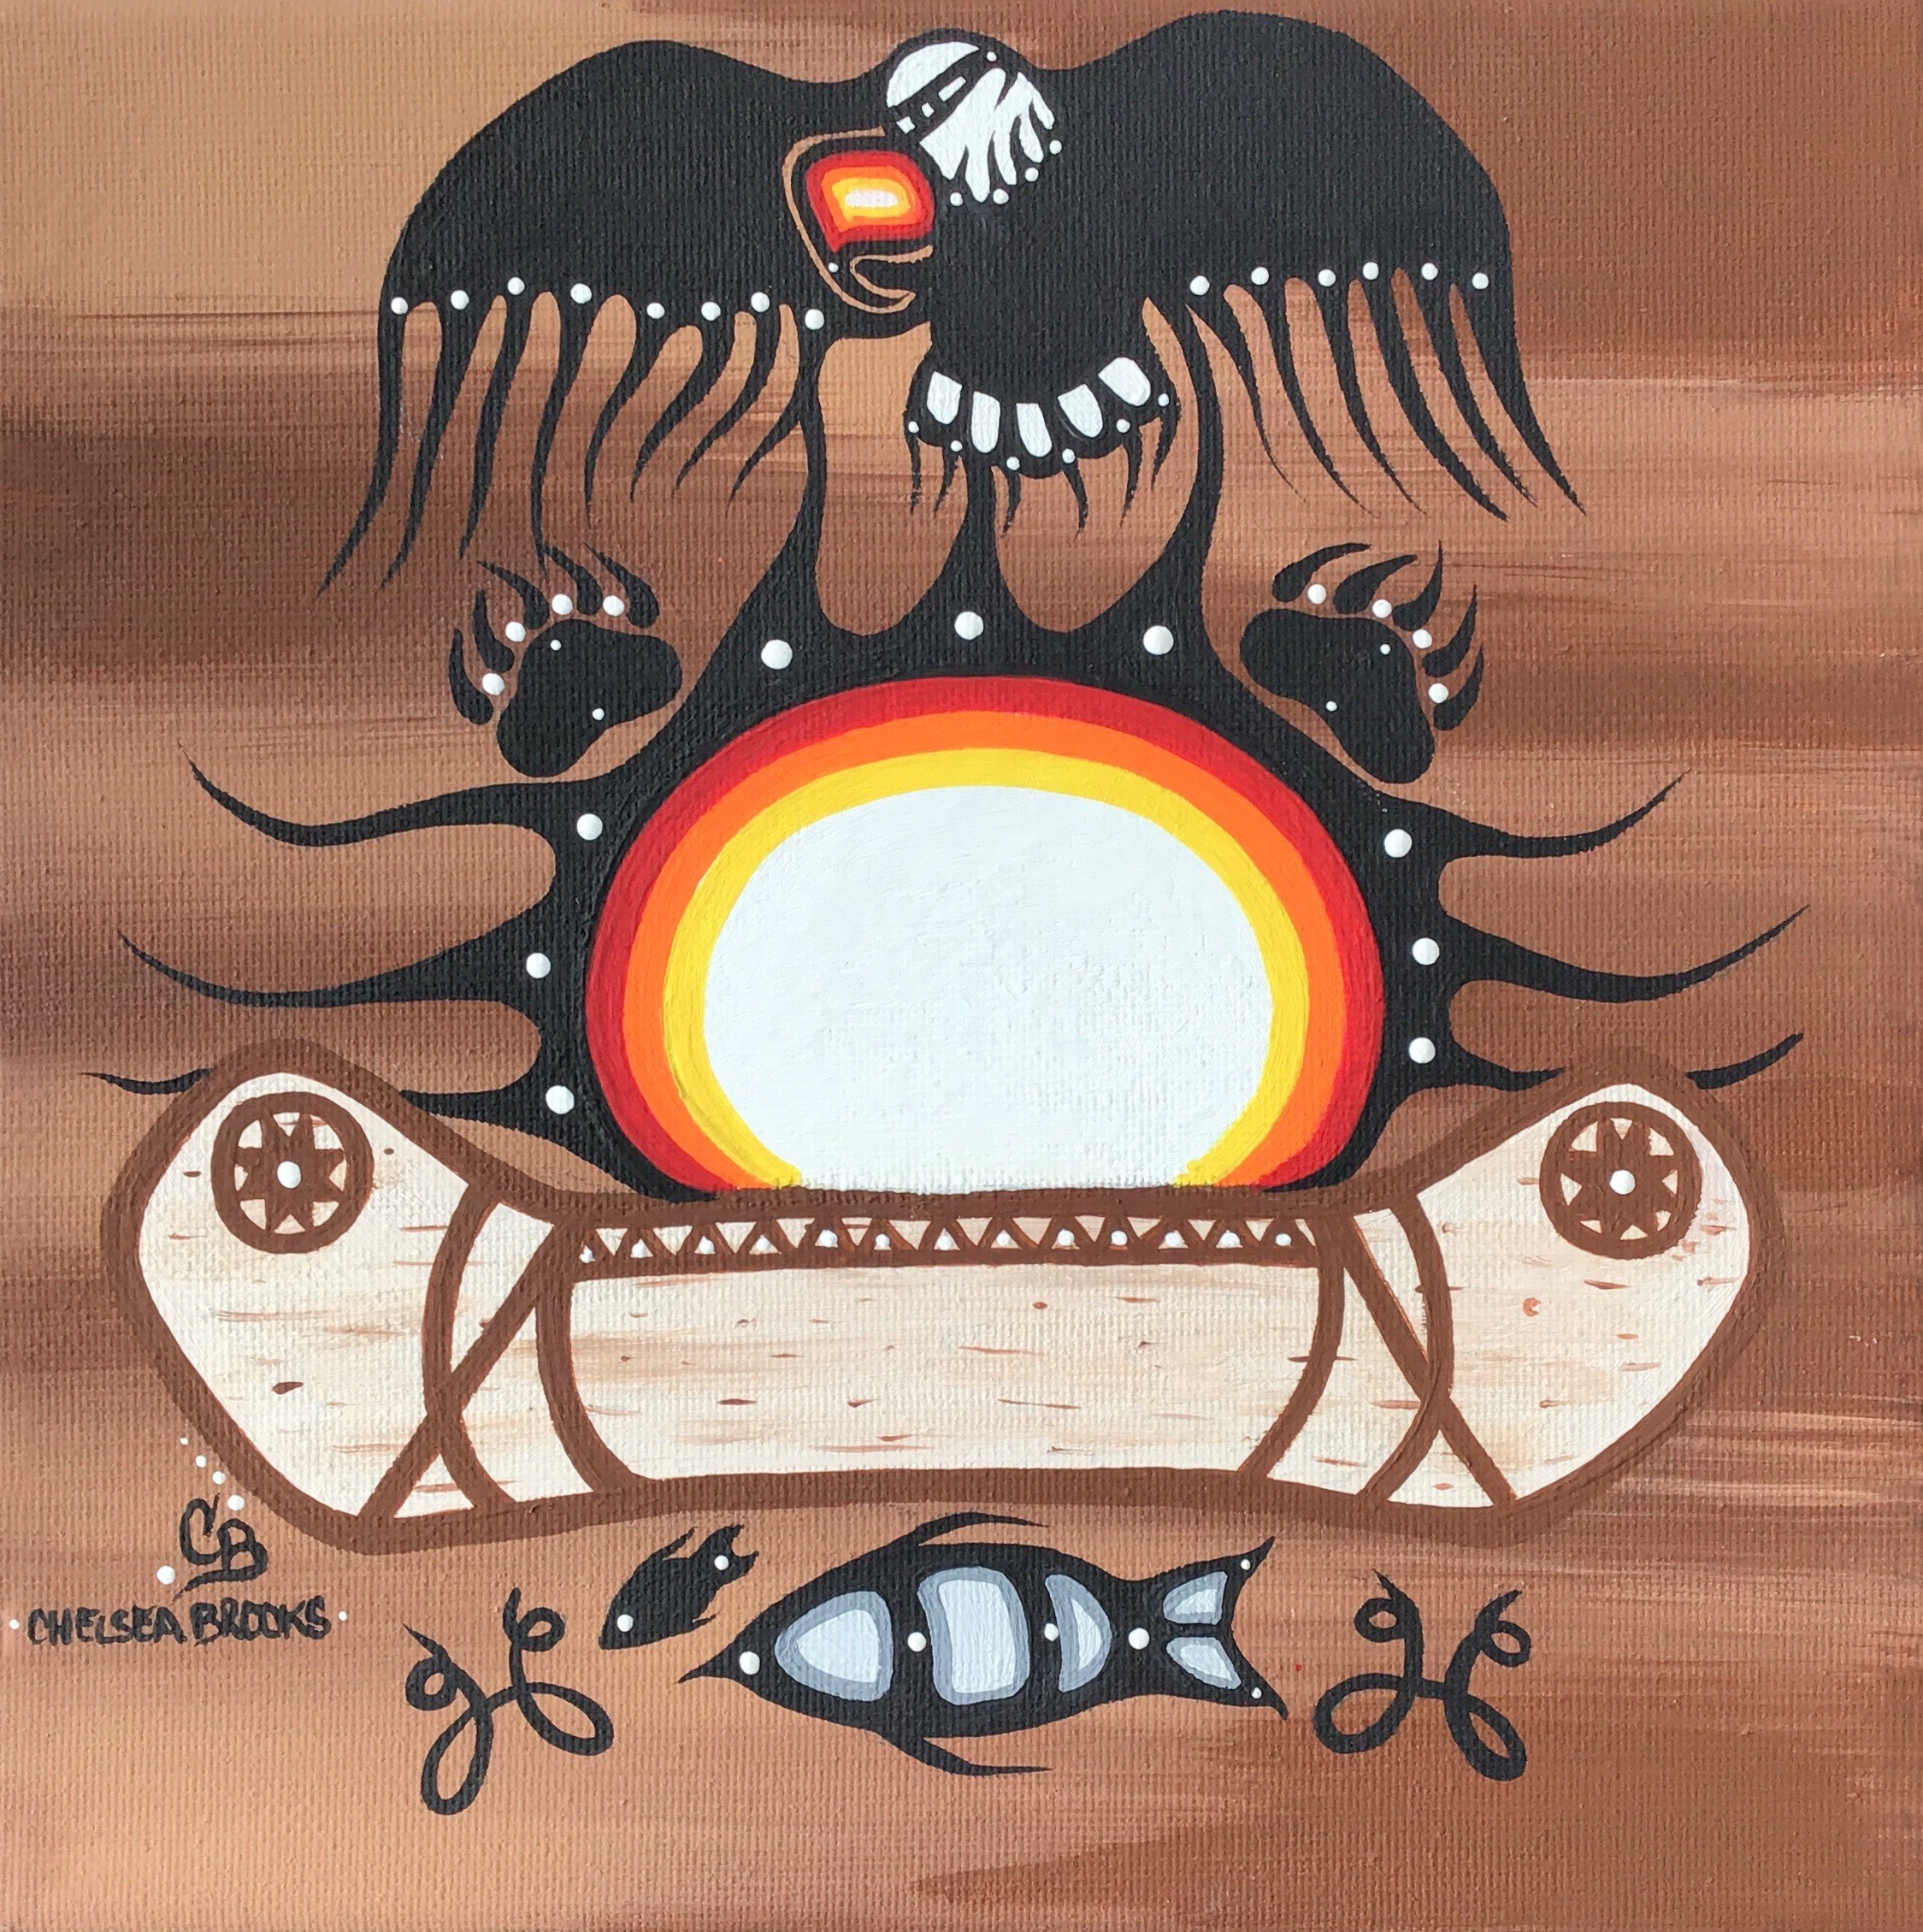 Mi'kmaq History Month art by Chelsea Brooks